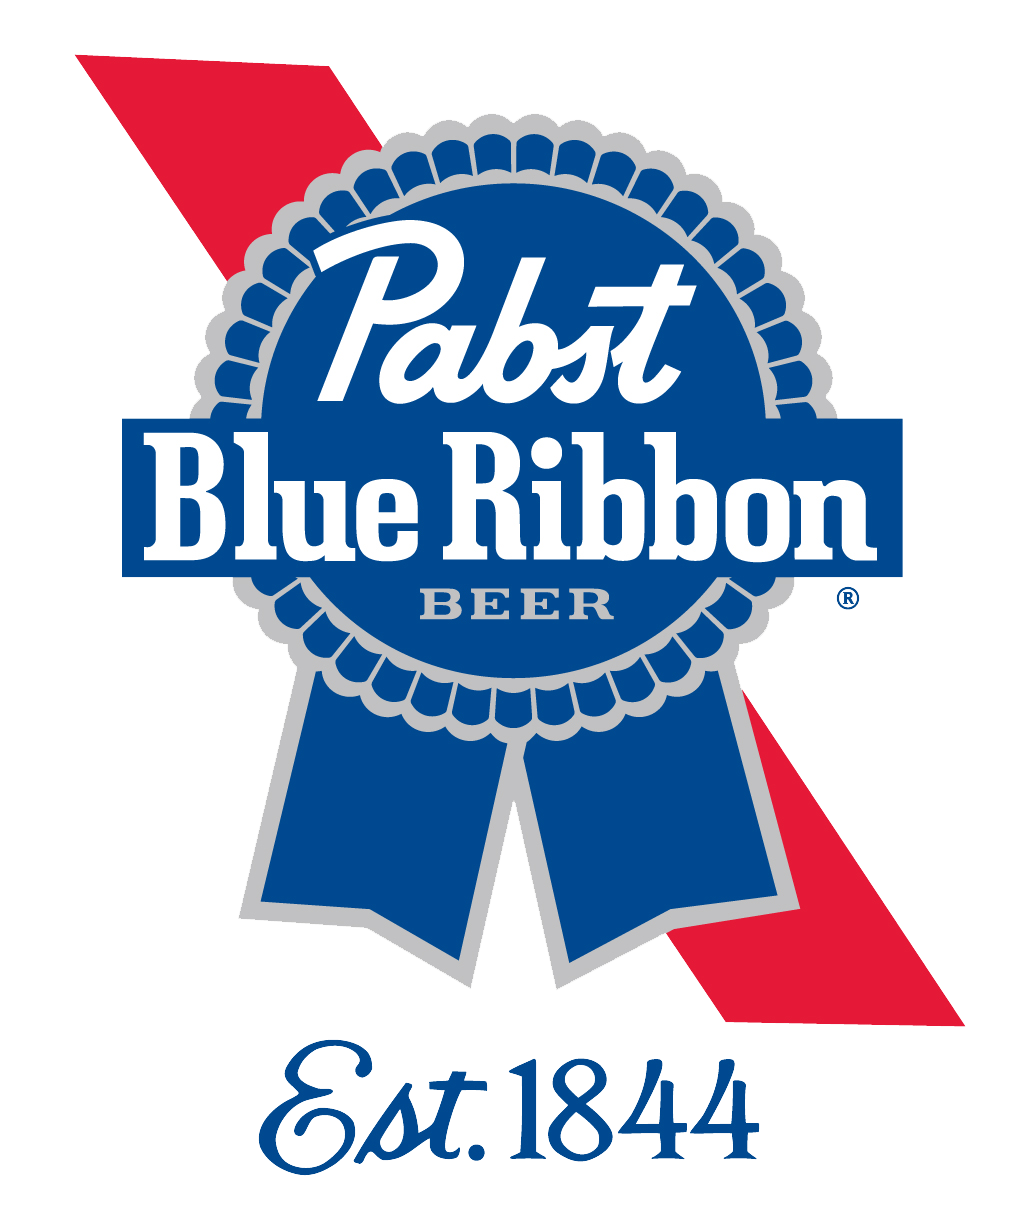 pabst-blue-ribbon.png